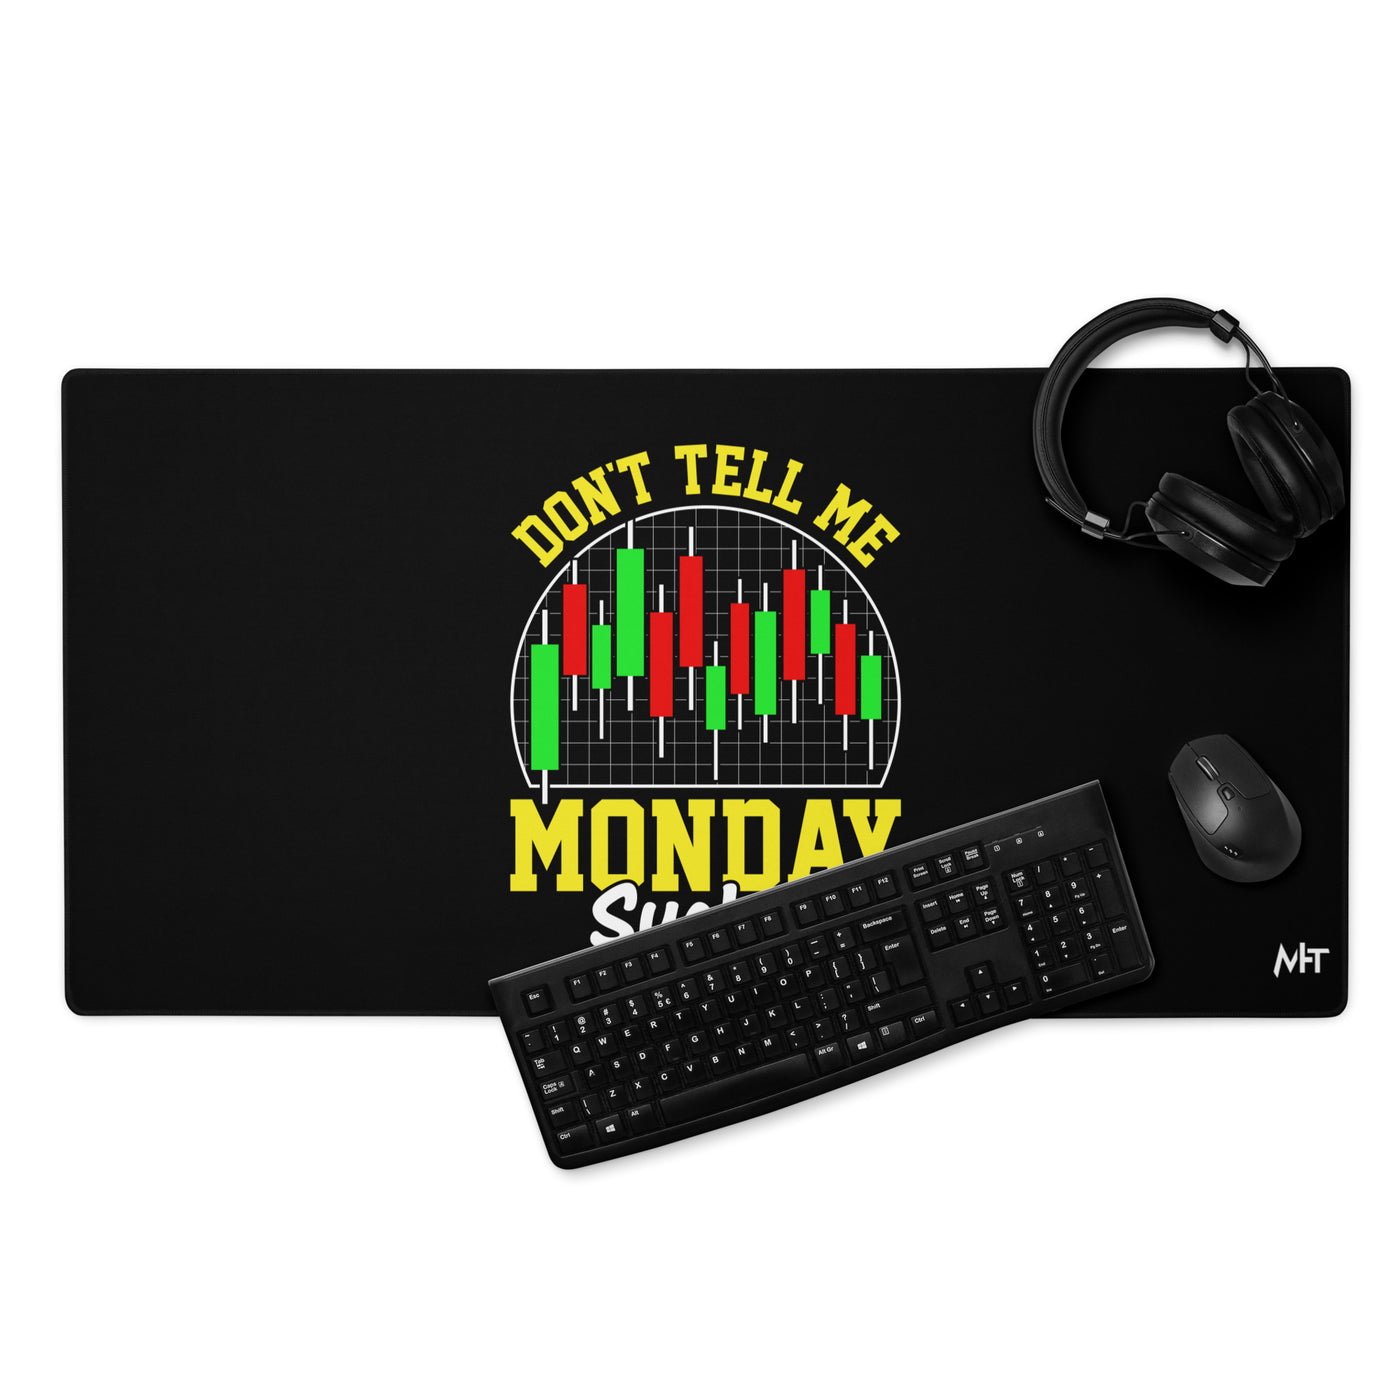 Don't Tell me Monday Sucks - Desk Mat